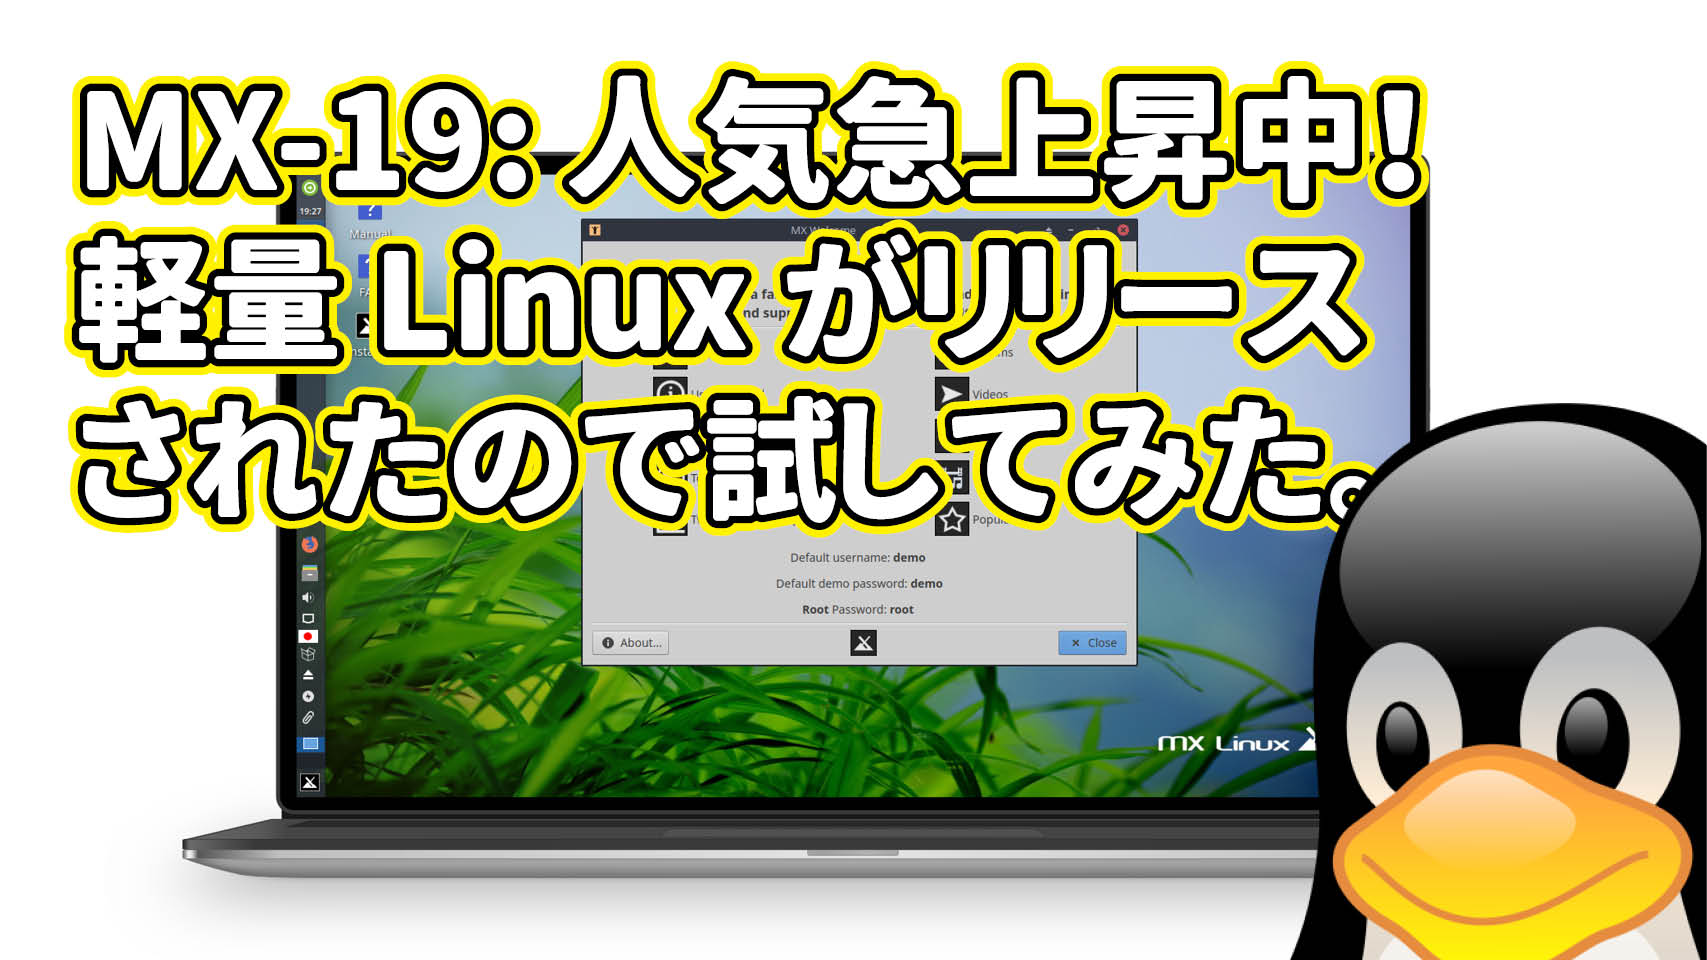 MX-19: 人気急上昇中！軽量 Linux がリリースされたので試してみた。